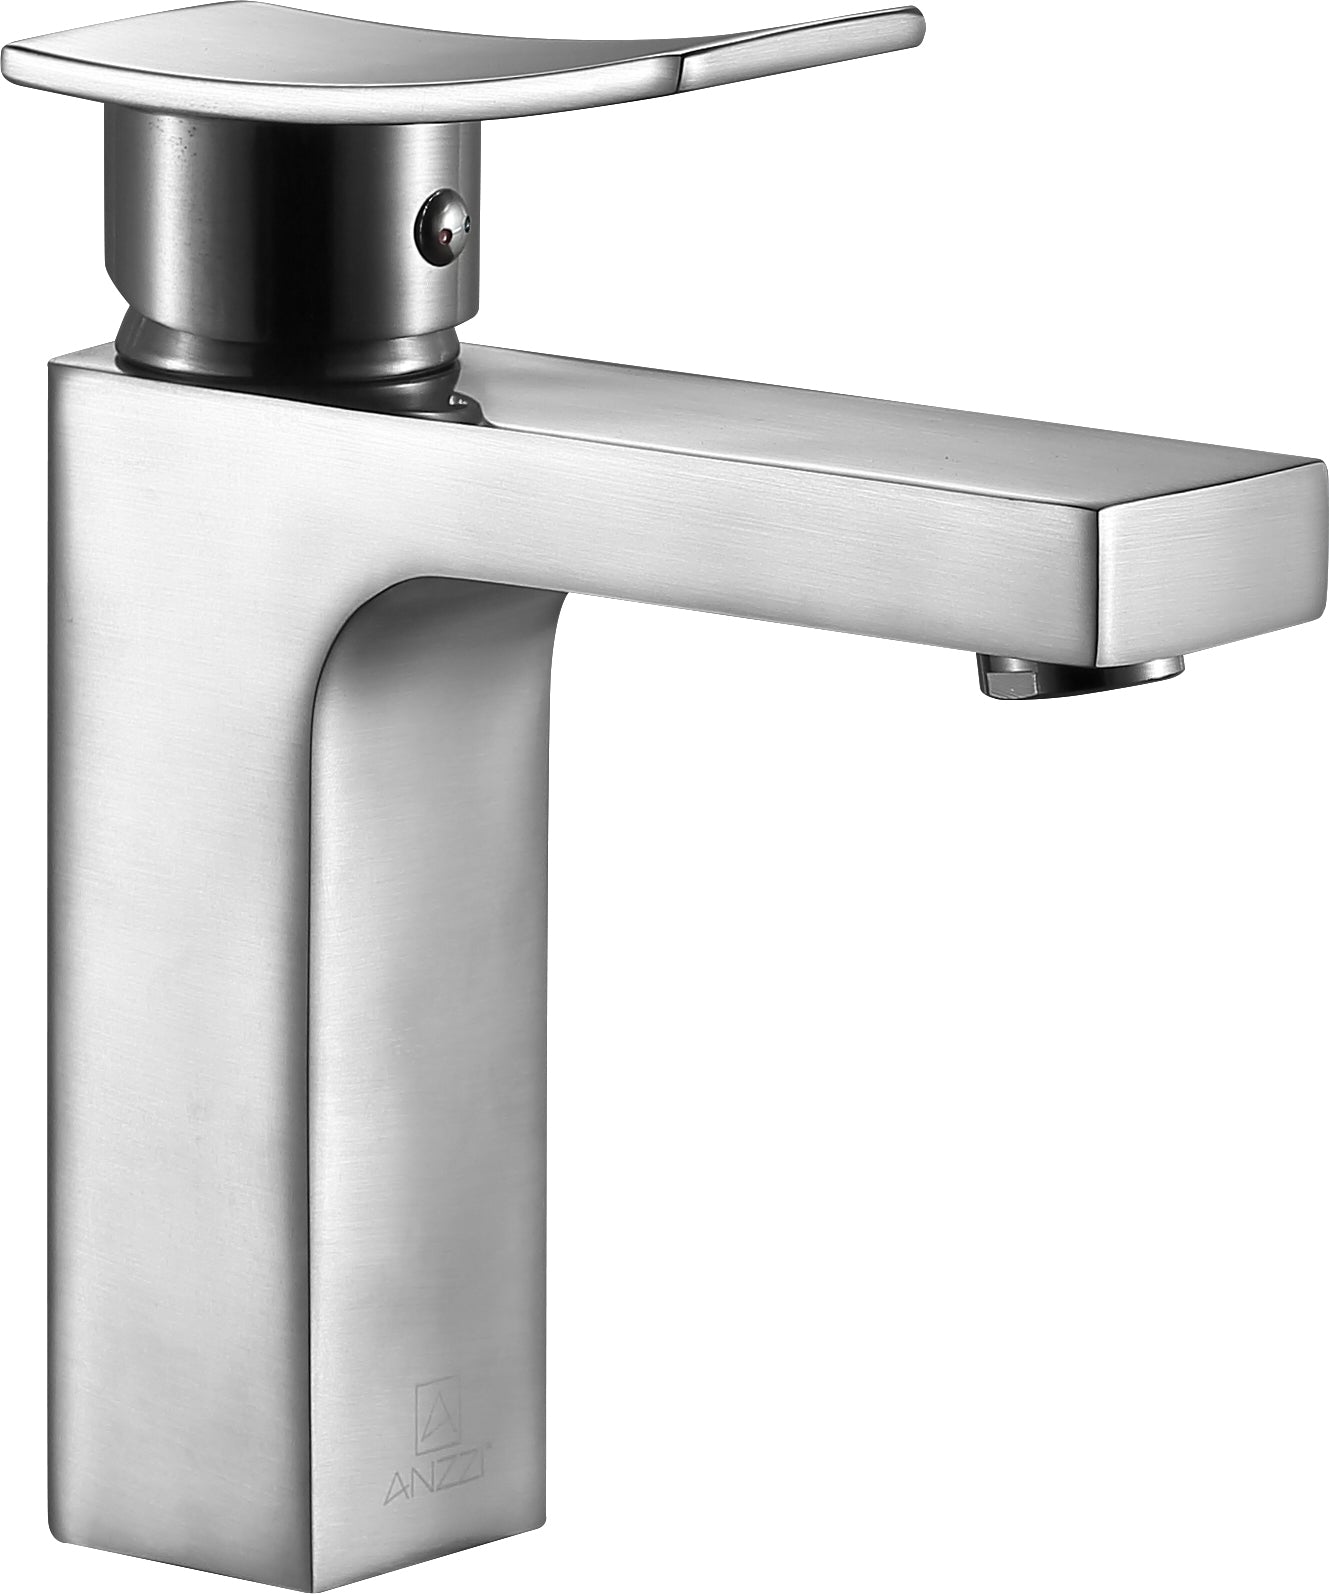 L-AZ117BN - Promenade Single Hole Single Handle Bathroom Faucet in Brushed Nickel